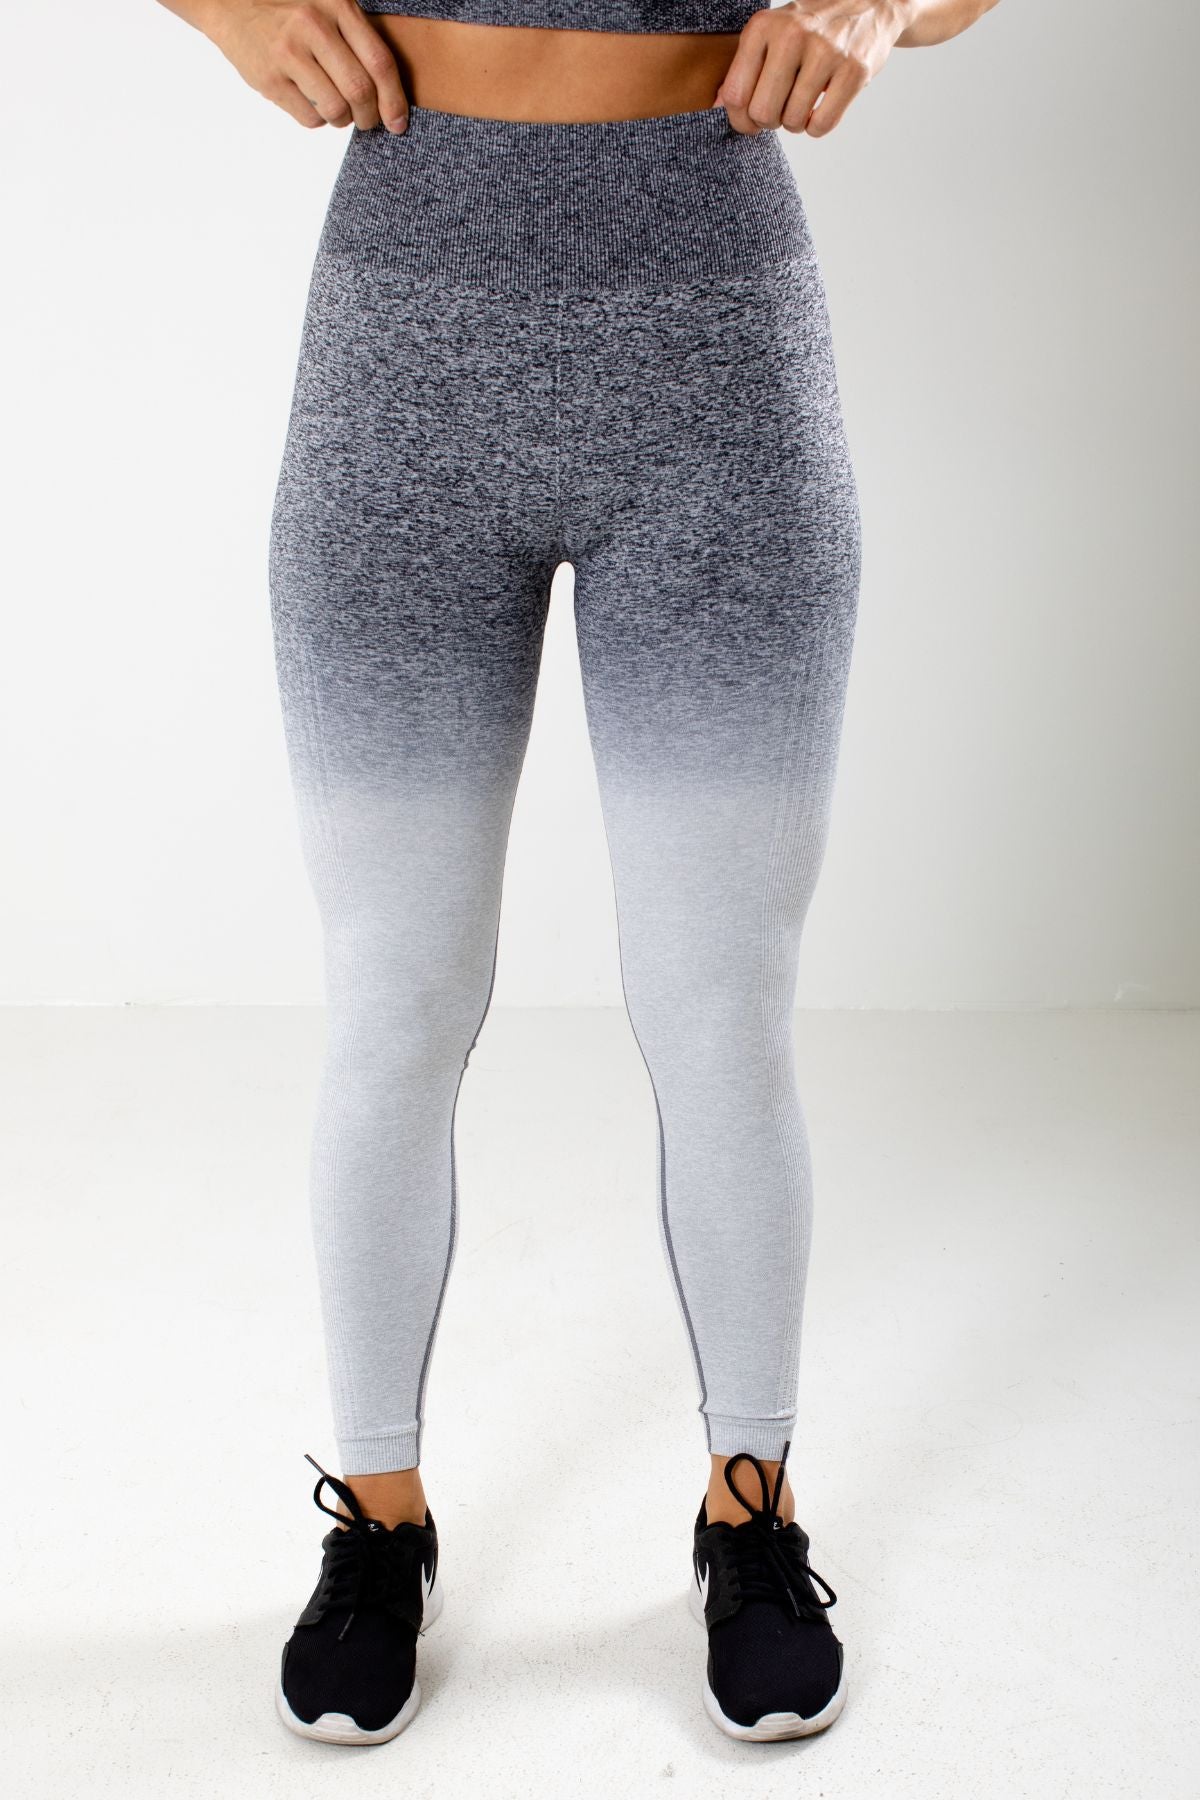 Women's Gray Ombre Boutique Activewear Leggings